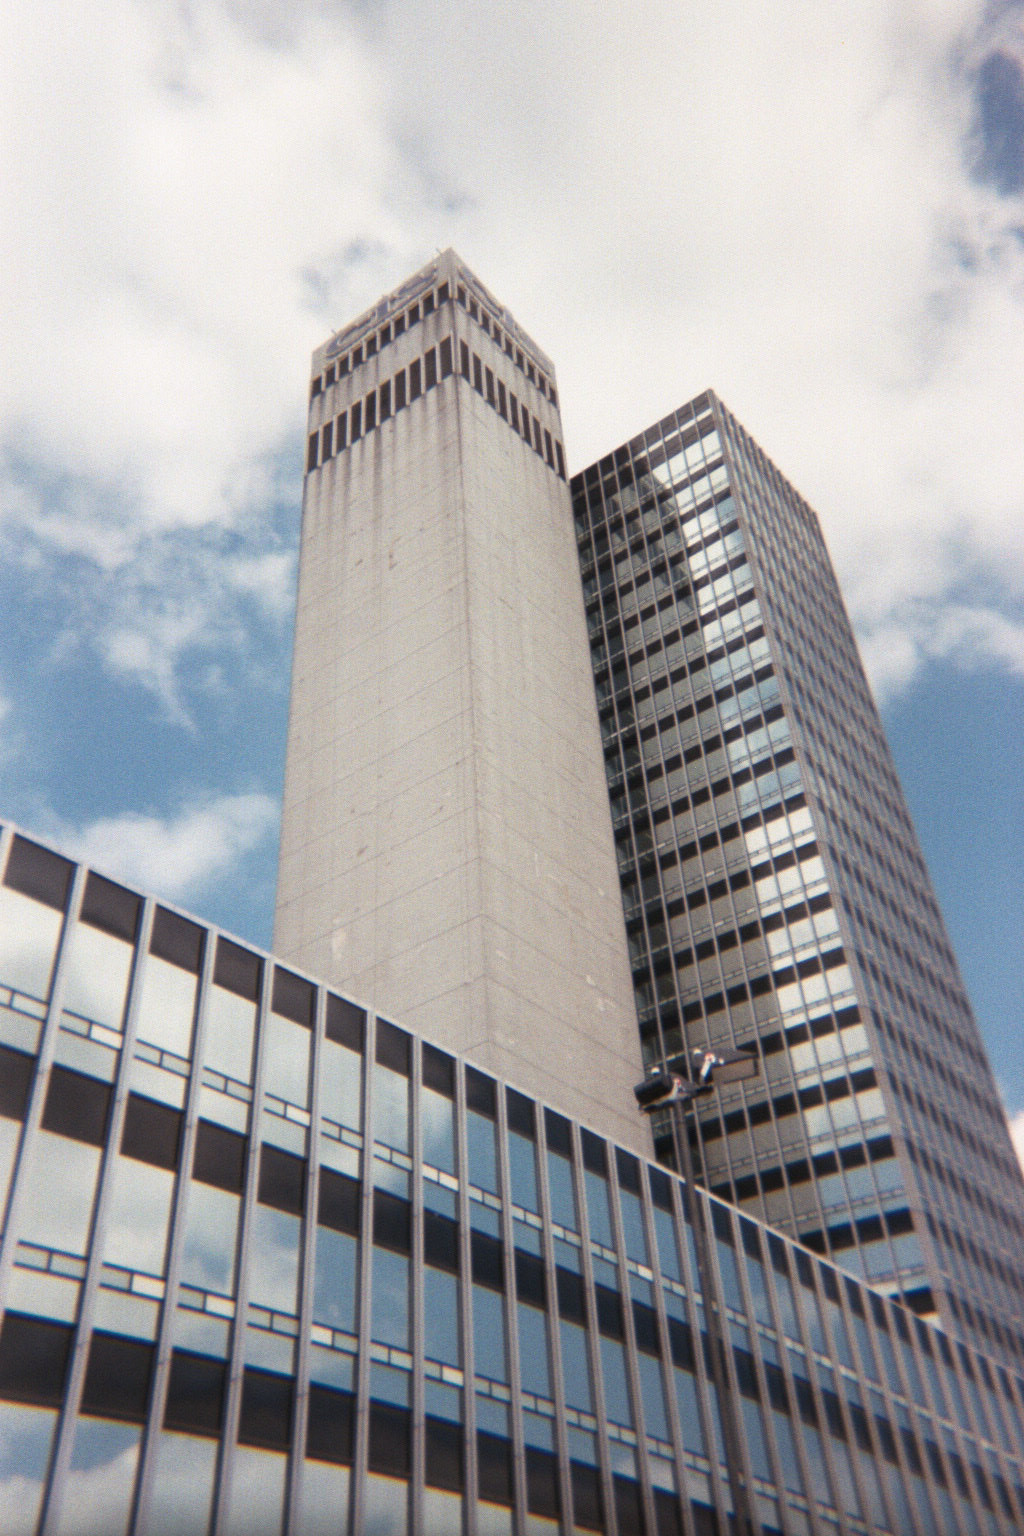 CIS building, Manchester